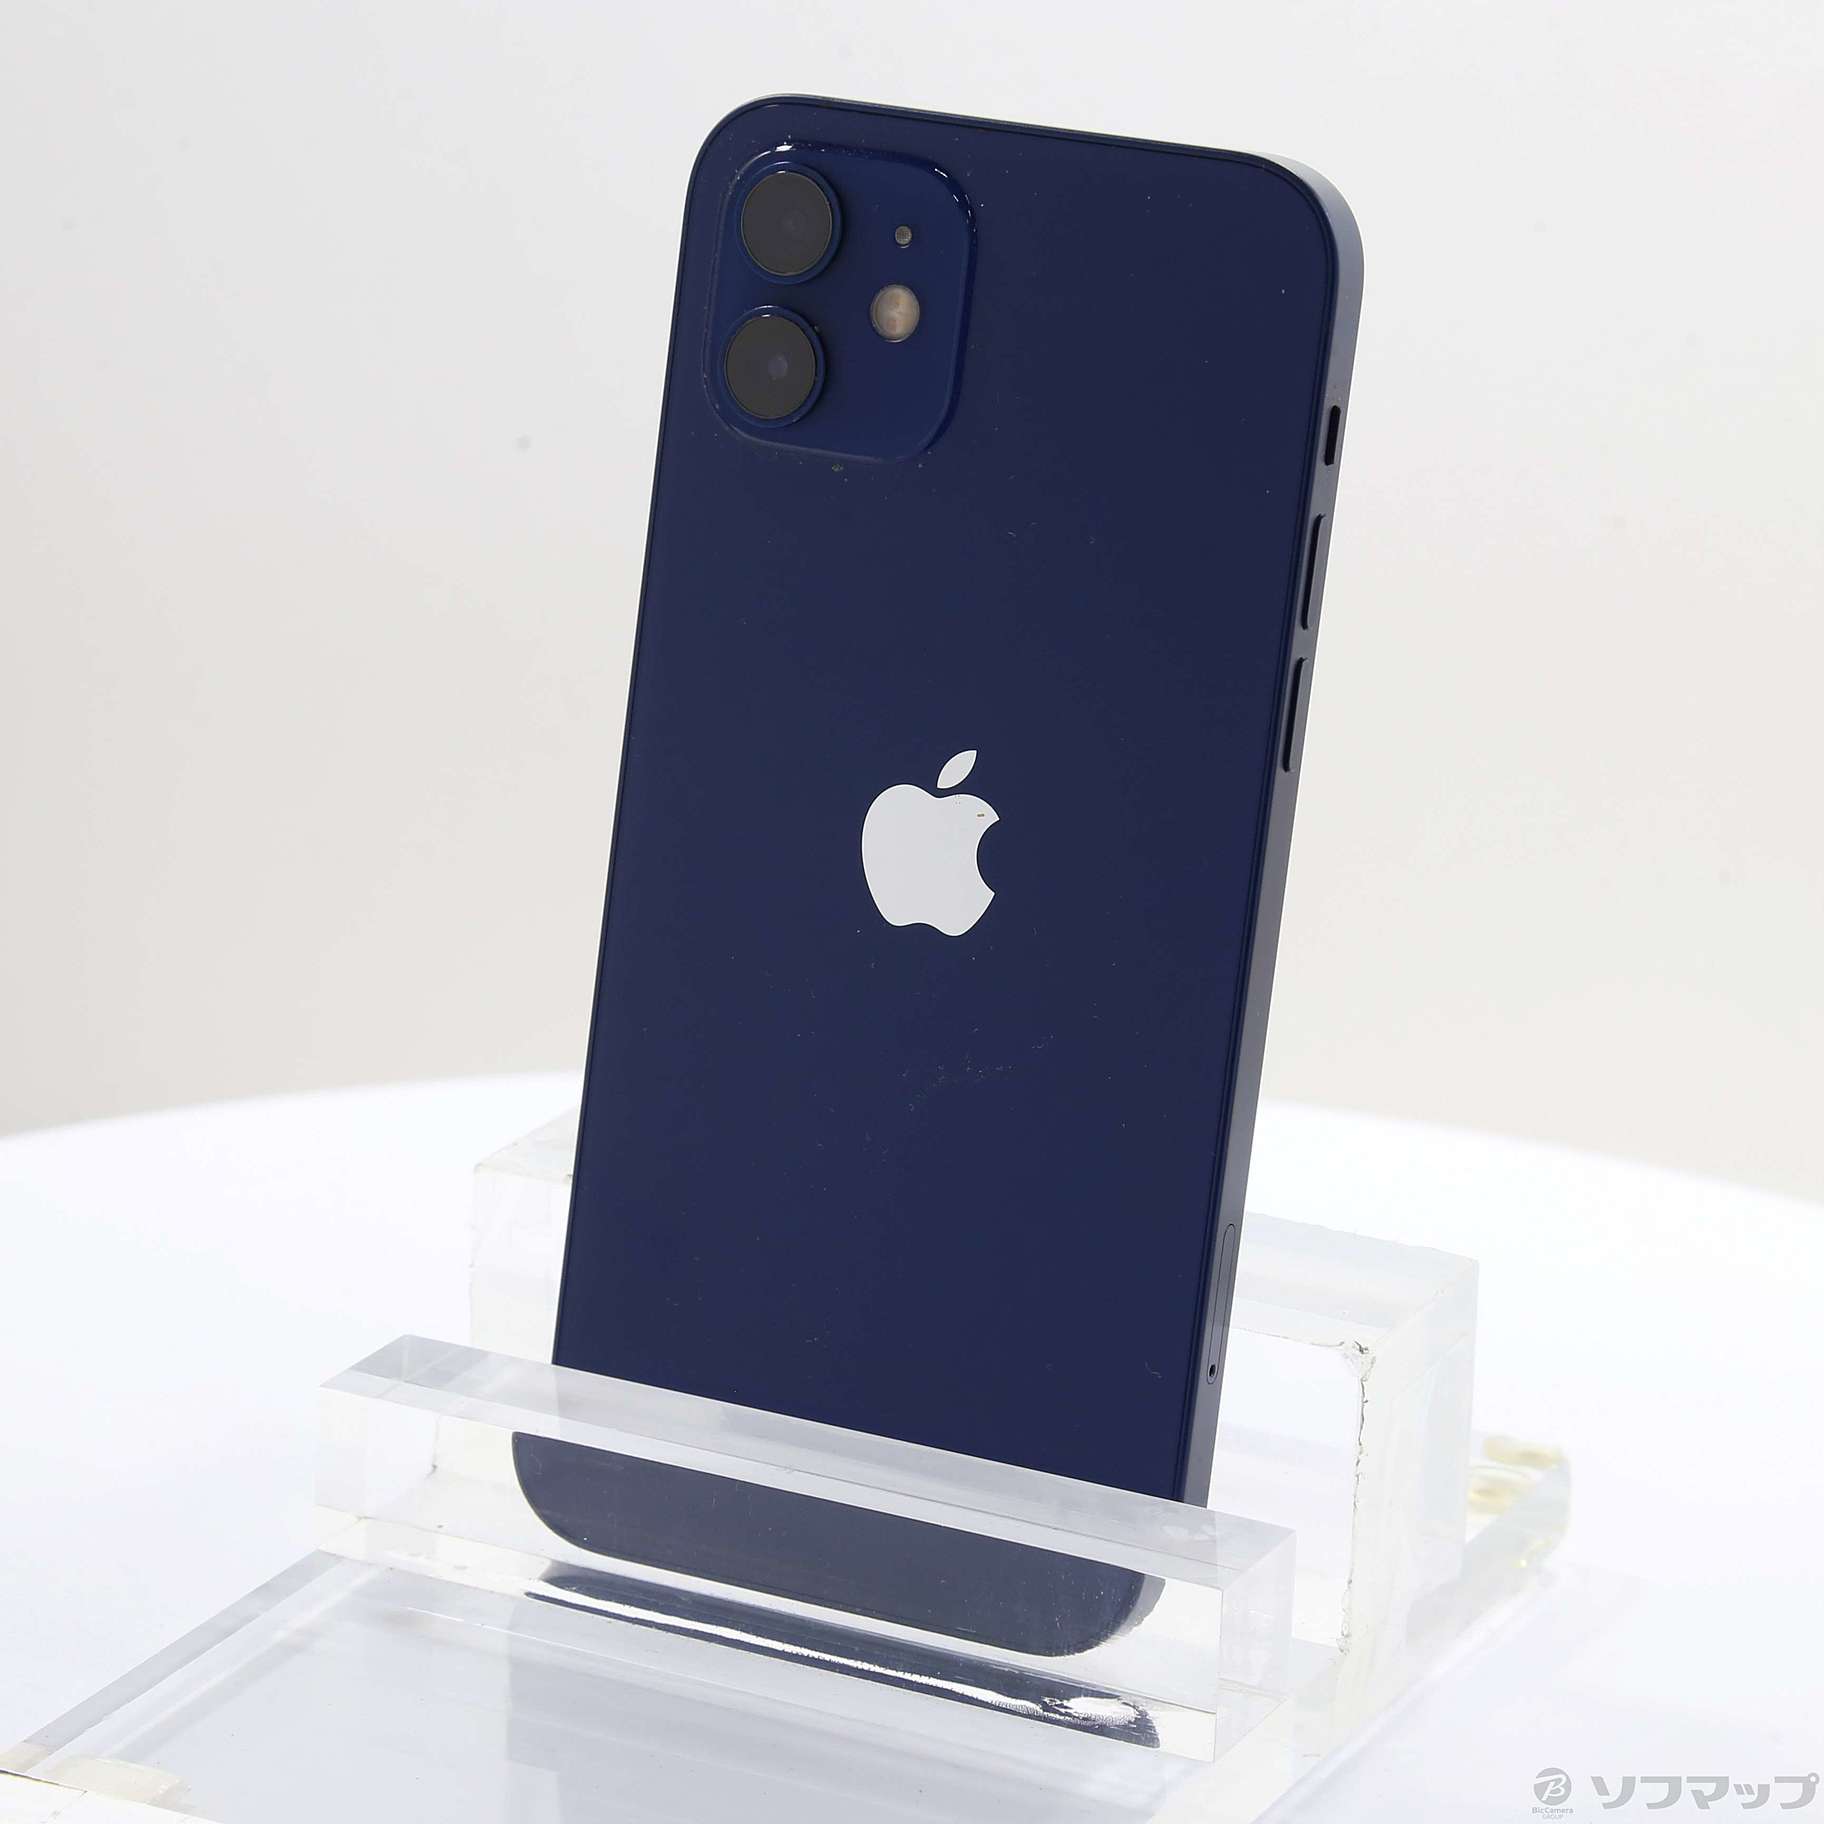 iPhone 12 128GB SIMフリー [ブルー] 中古(白ロム)価格比較 - 価格.com